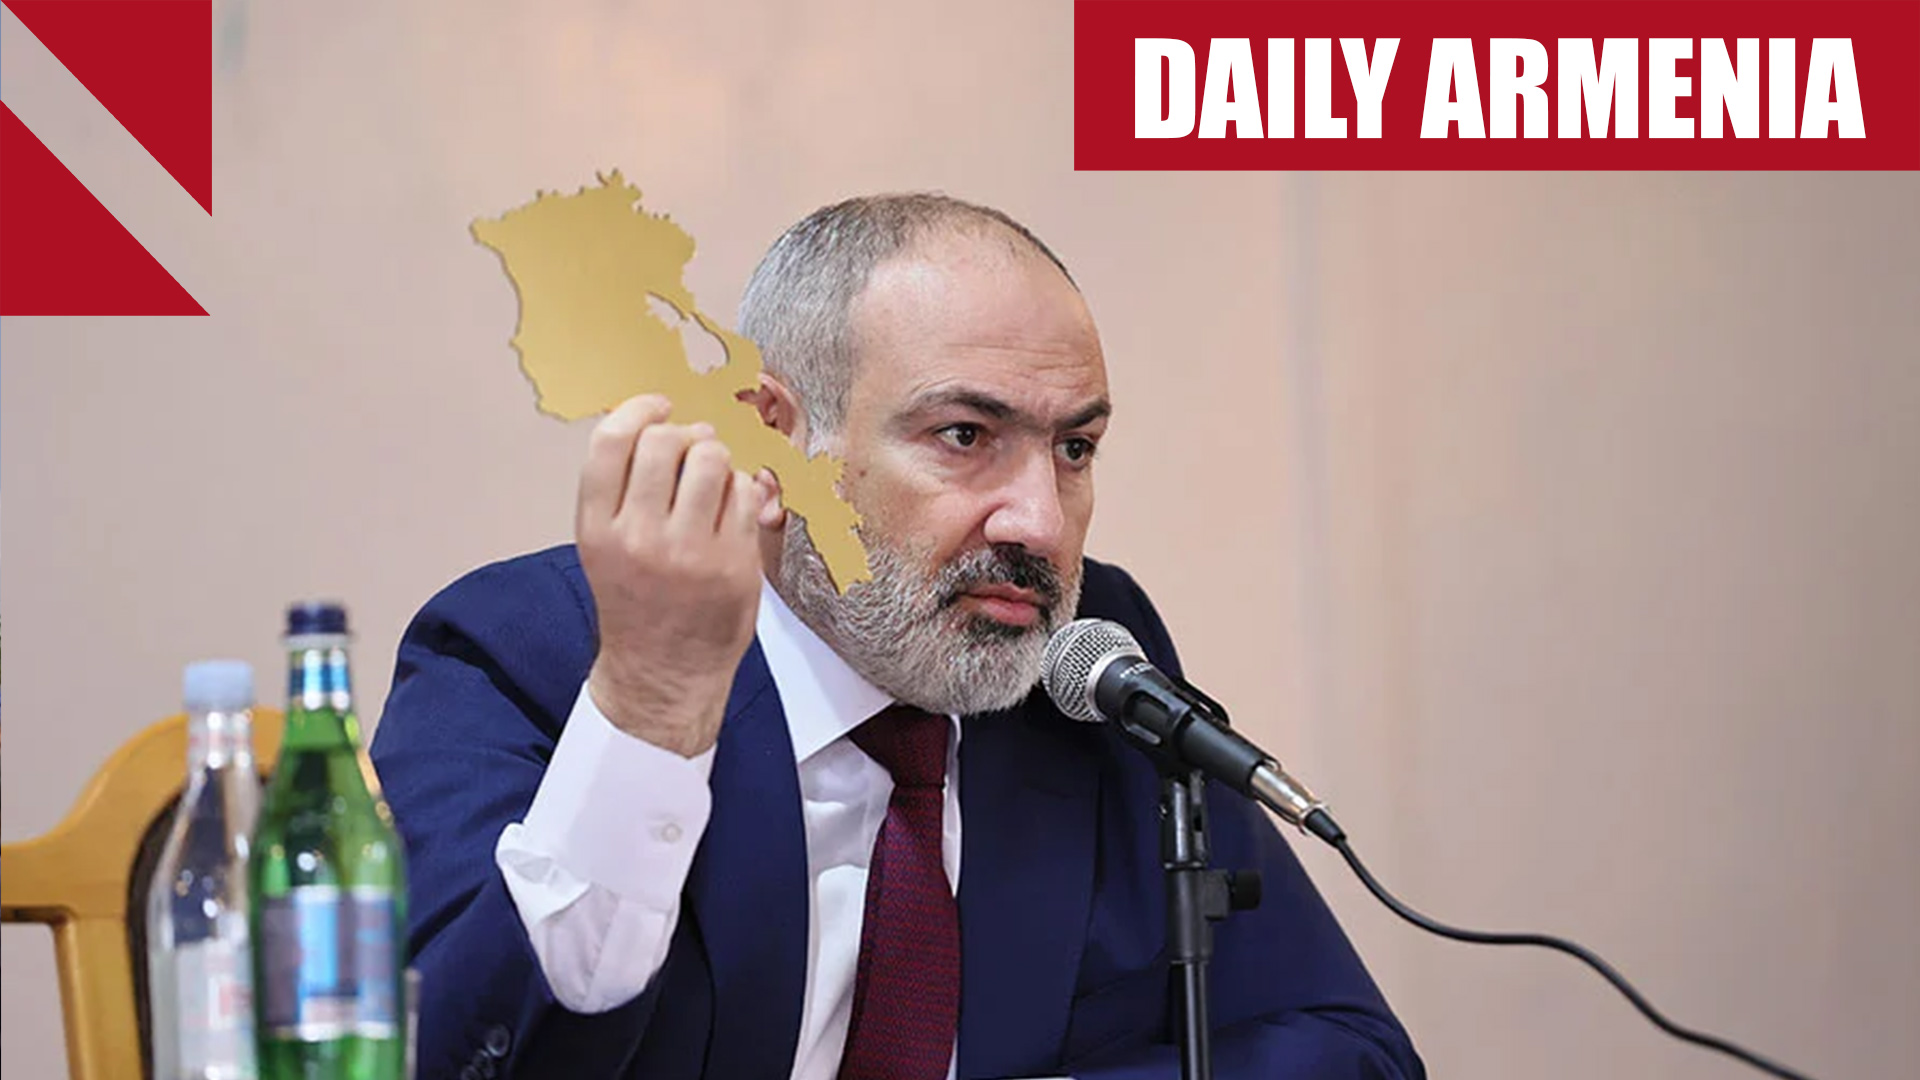 Pashinyan said he is ‘sacrificing’ himself for the good of Armenia over unpopular border proposal 